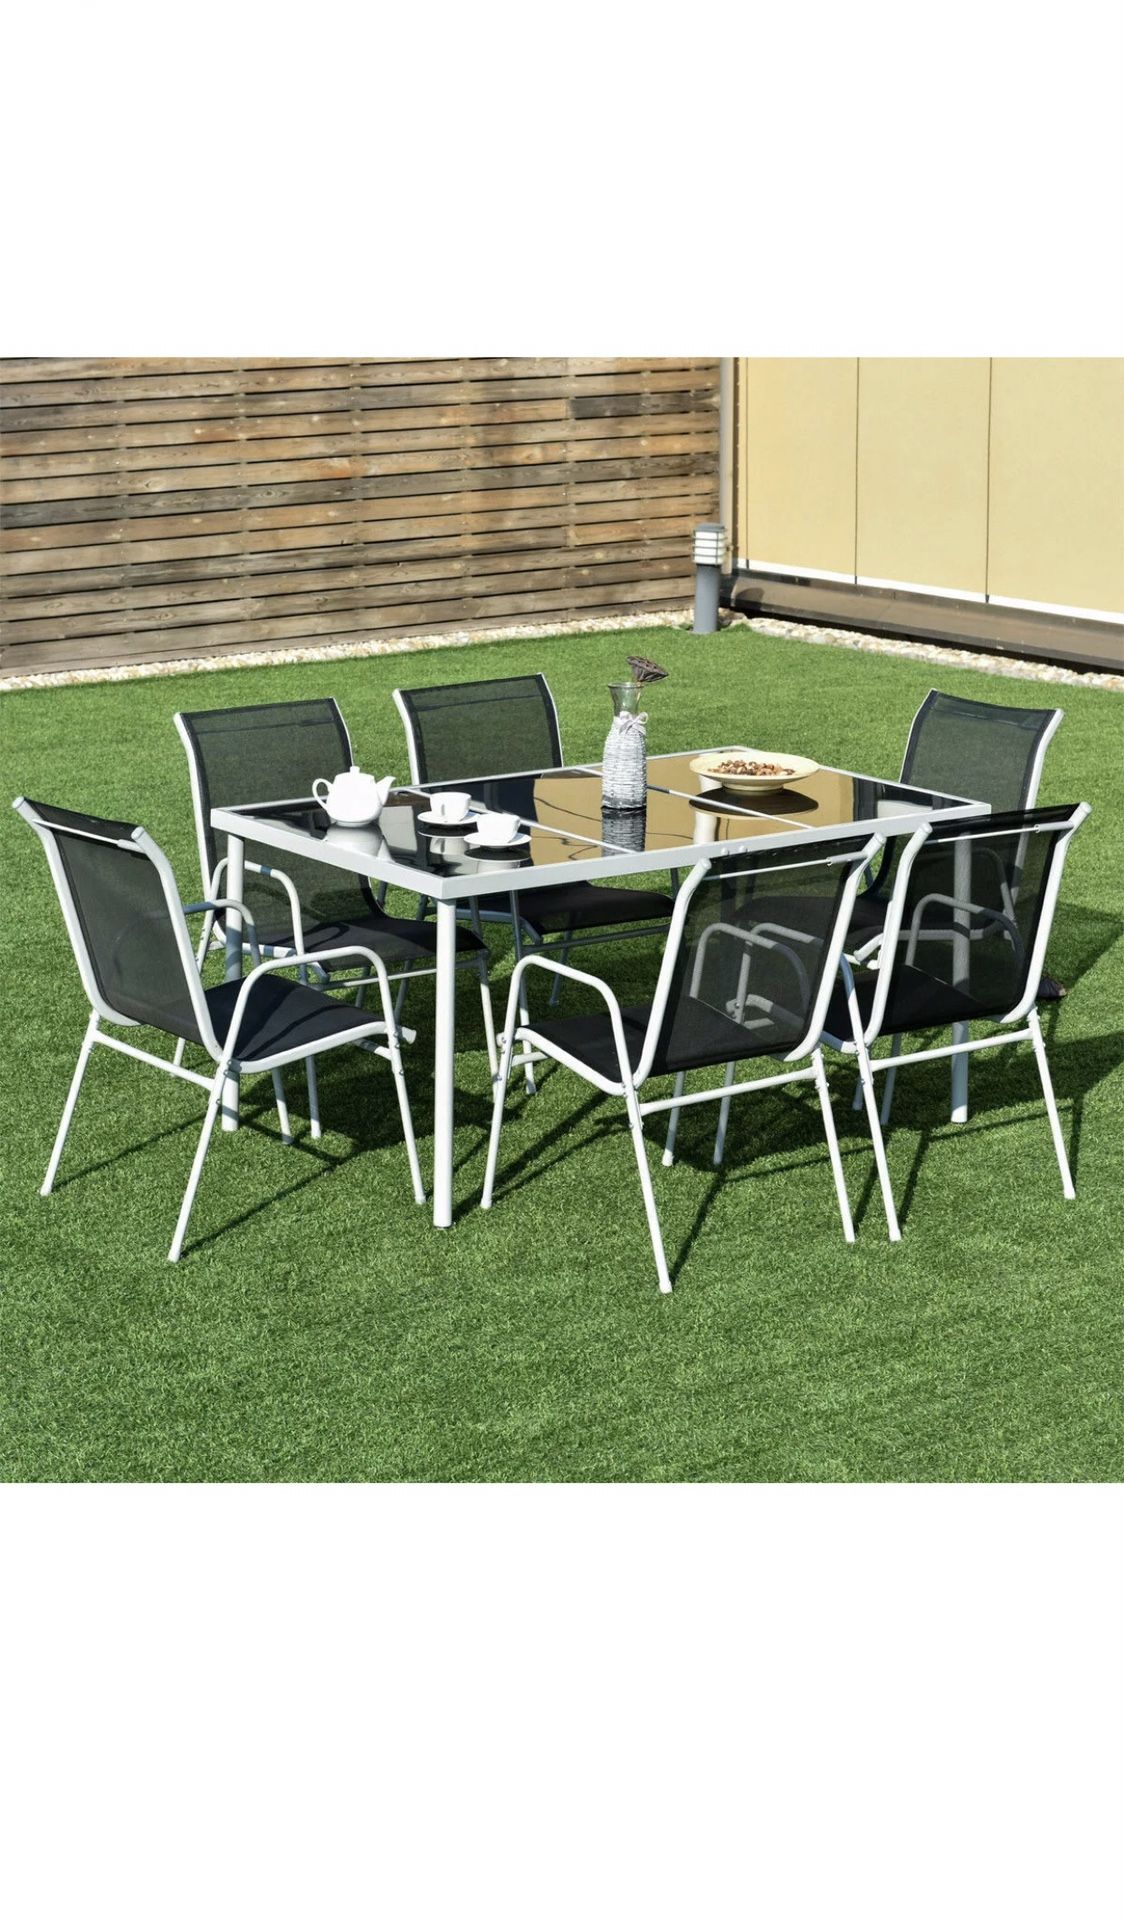 Outdoor furniture, patio furniture, outdoor patio furniture, table set, 7pc table set, 400$ retail!